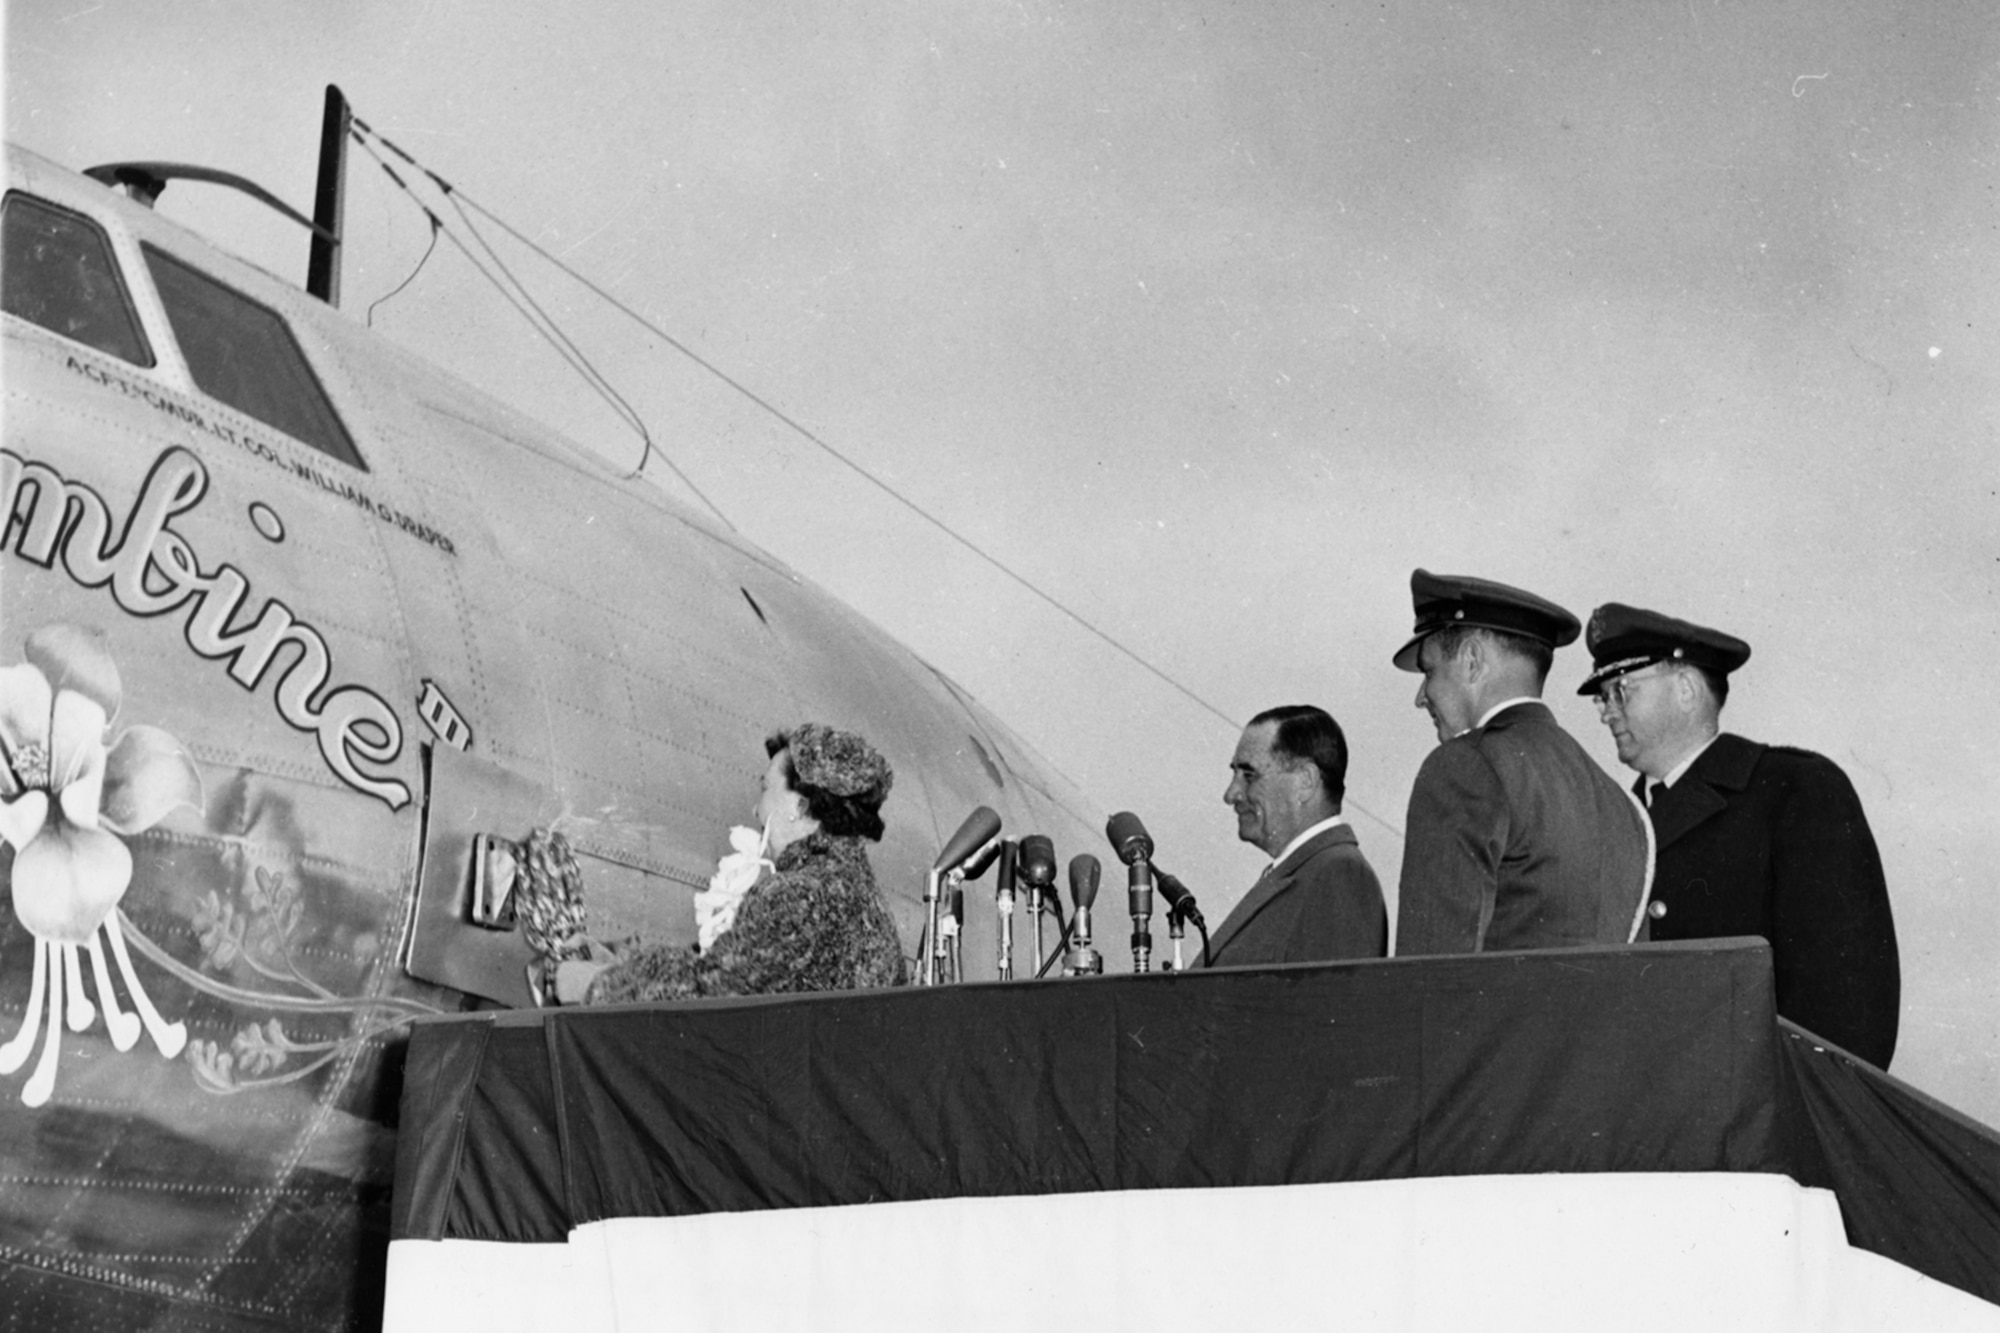 First Lady, Mamie Eisenhower christening the "Columbine III" at Washington National Airport on Nov. 24, 1954. (U.S. Air Force photo)